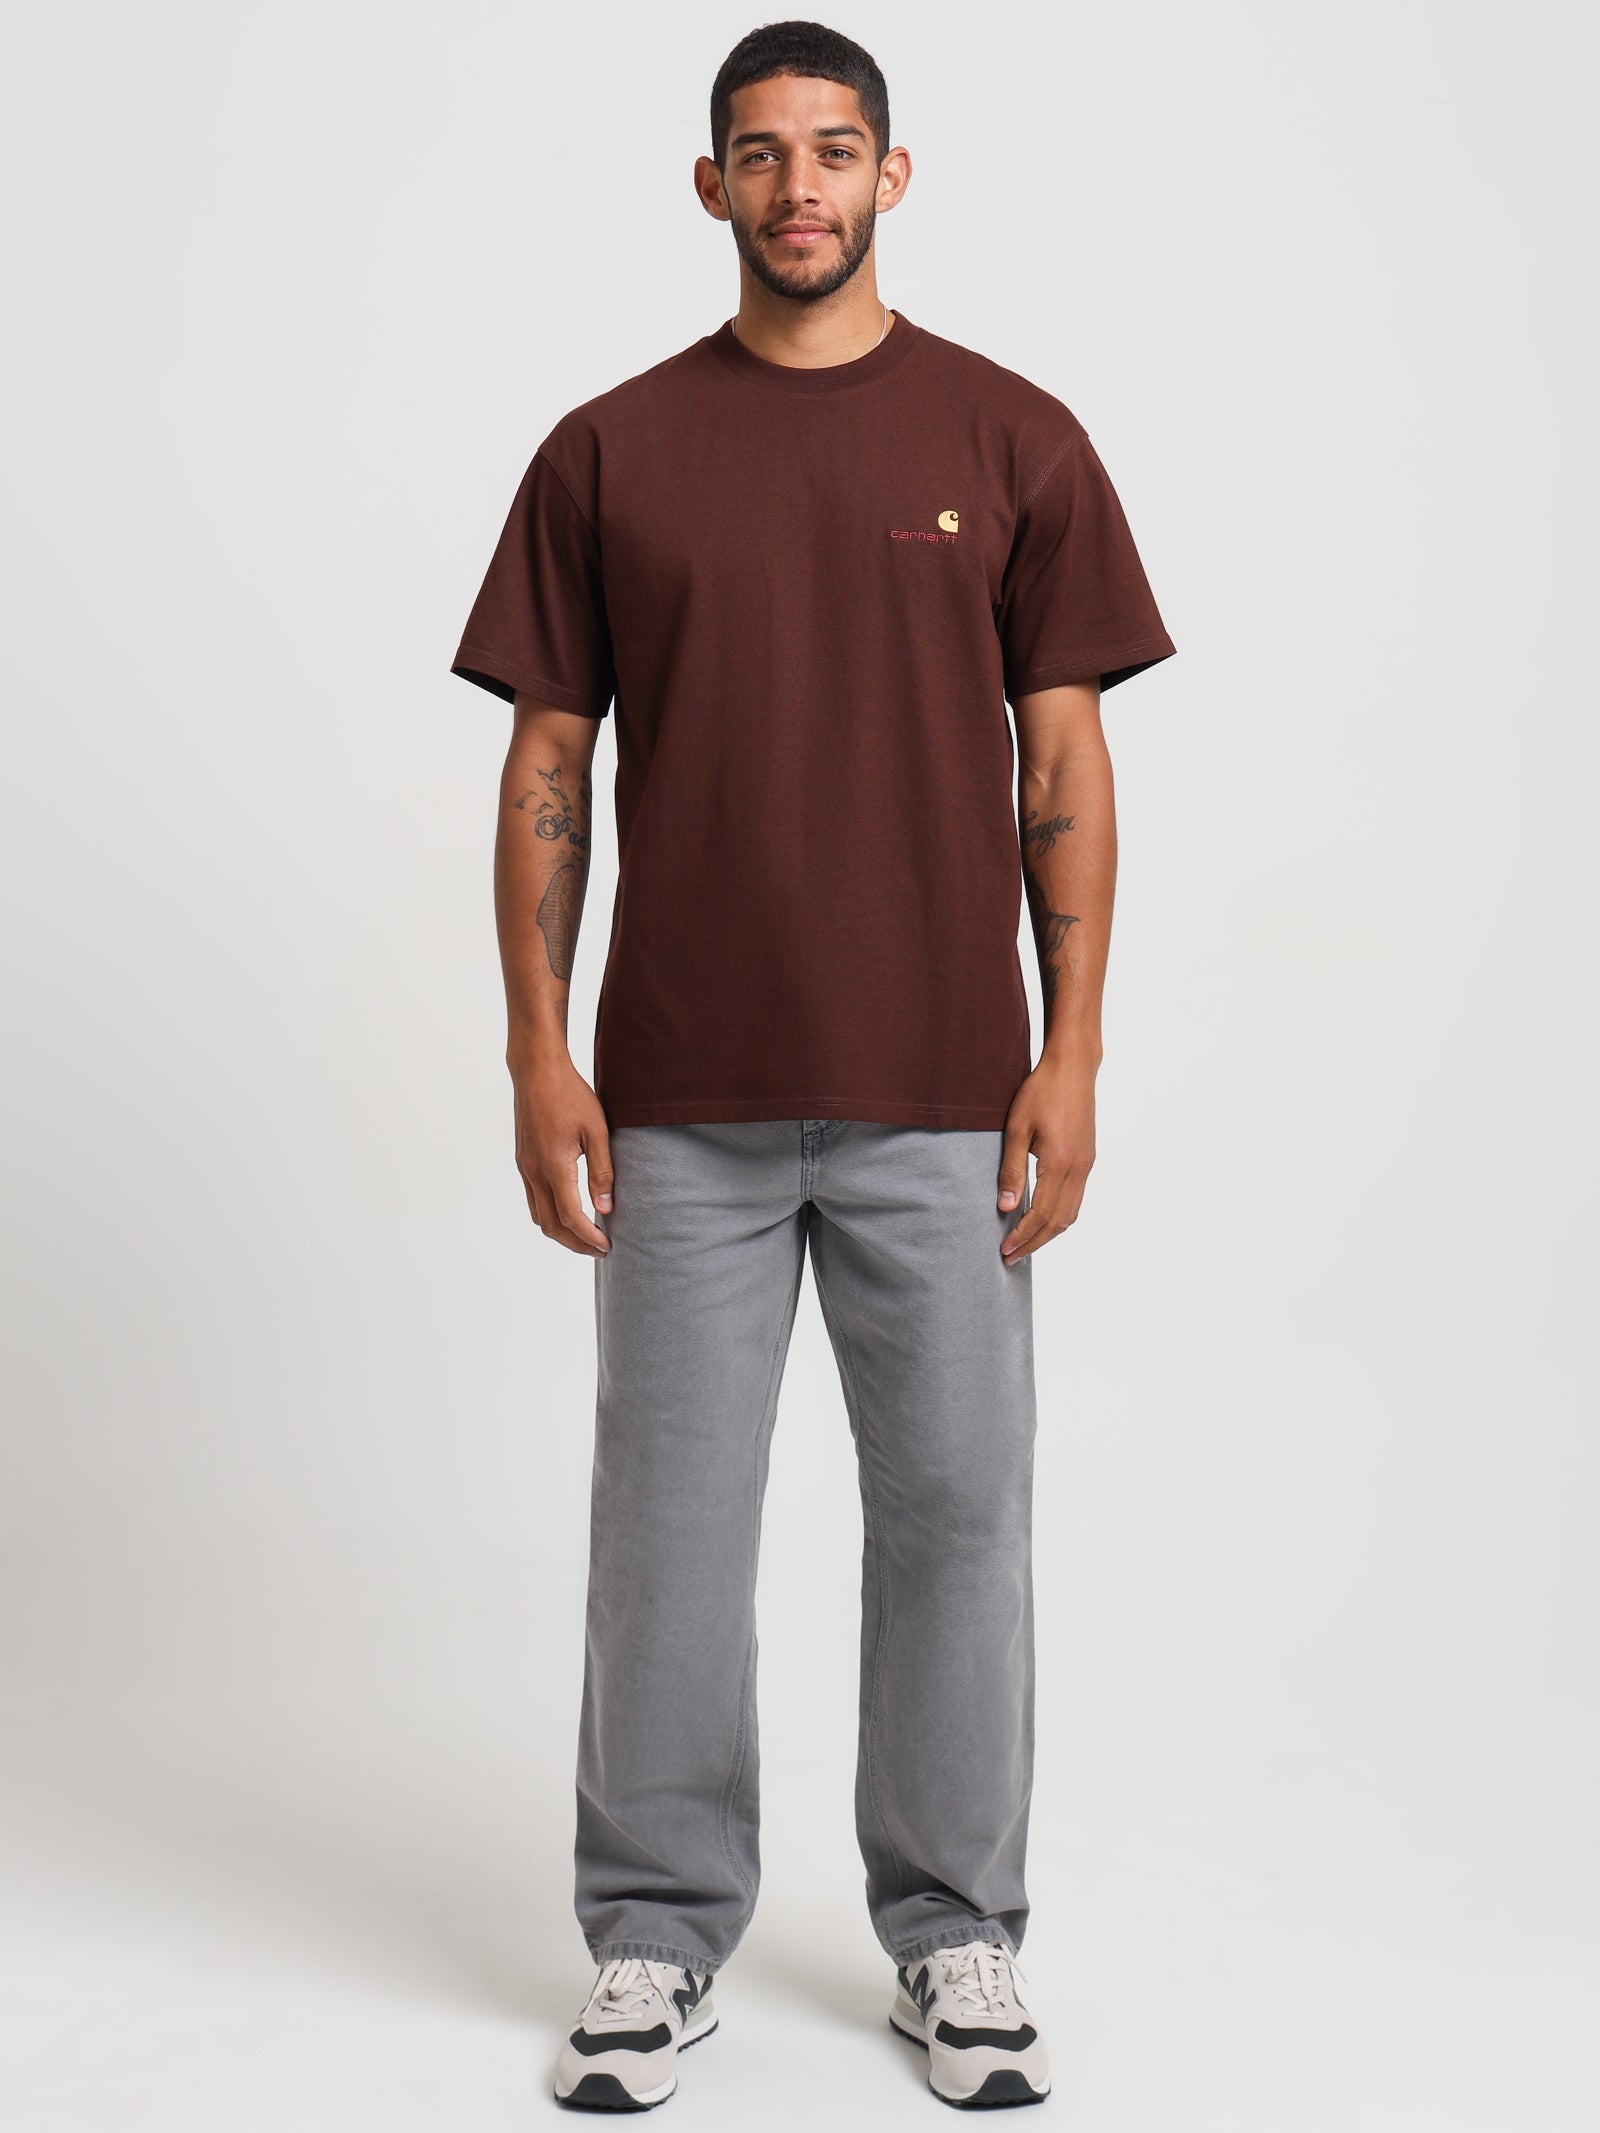 Carhartt WIP Goods T-shirt in brown